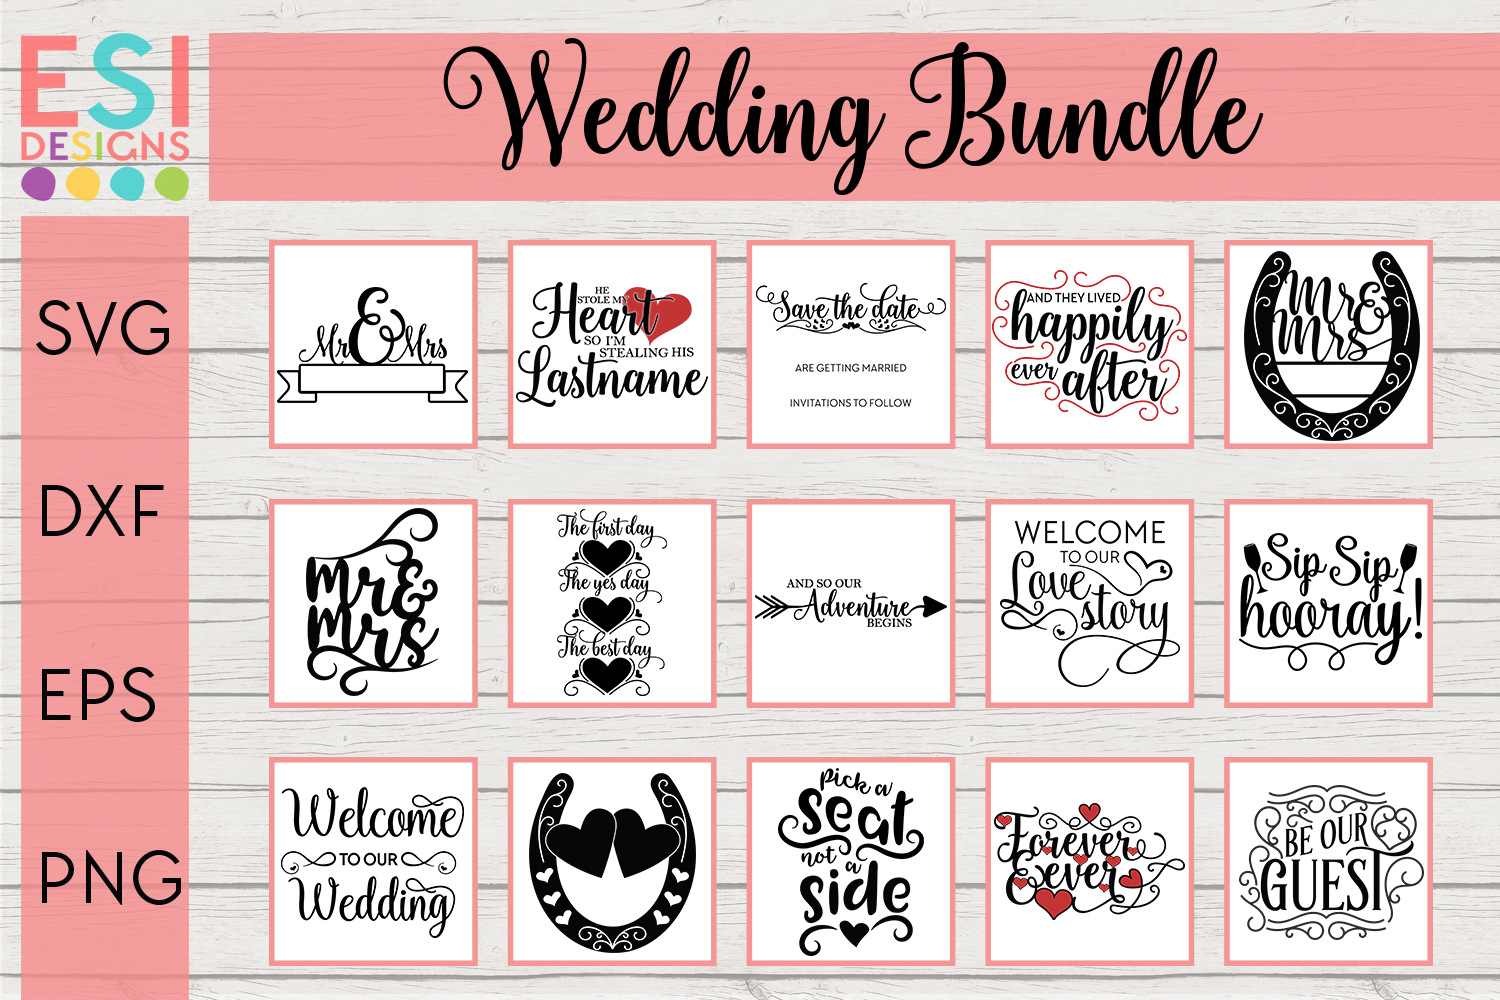 Wedding Bundle SVG - 15 Designs